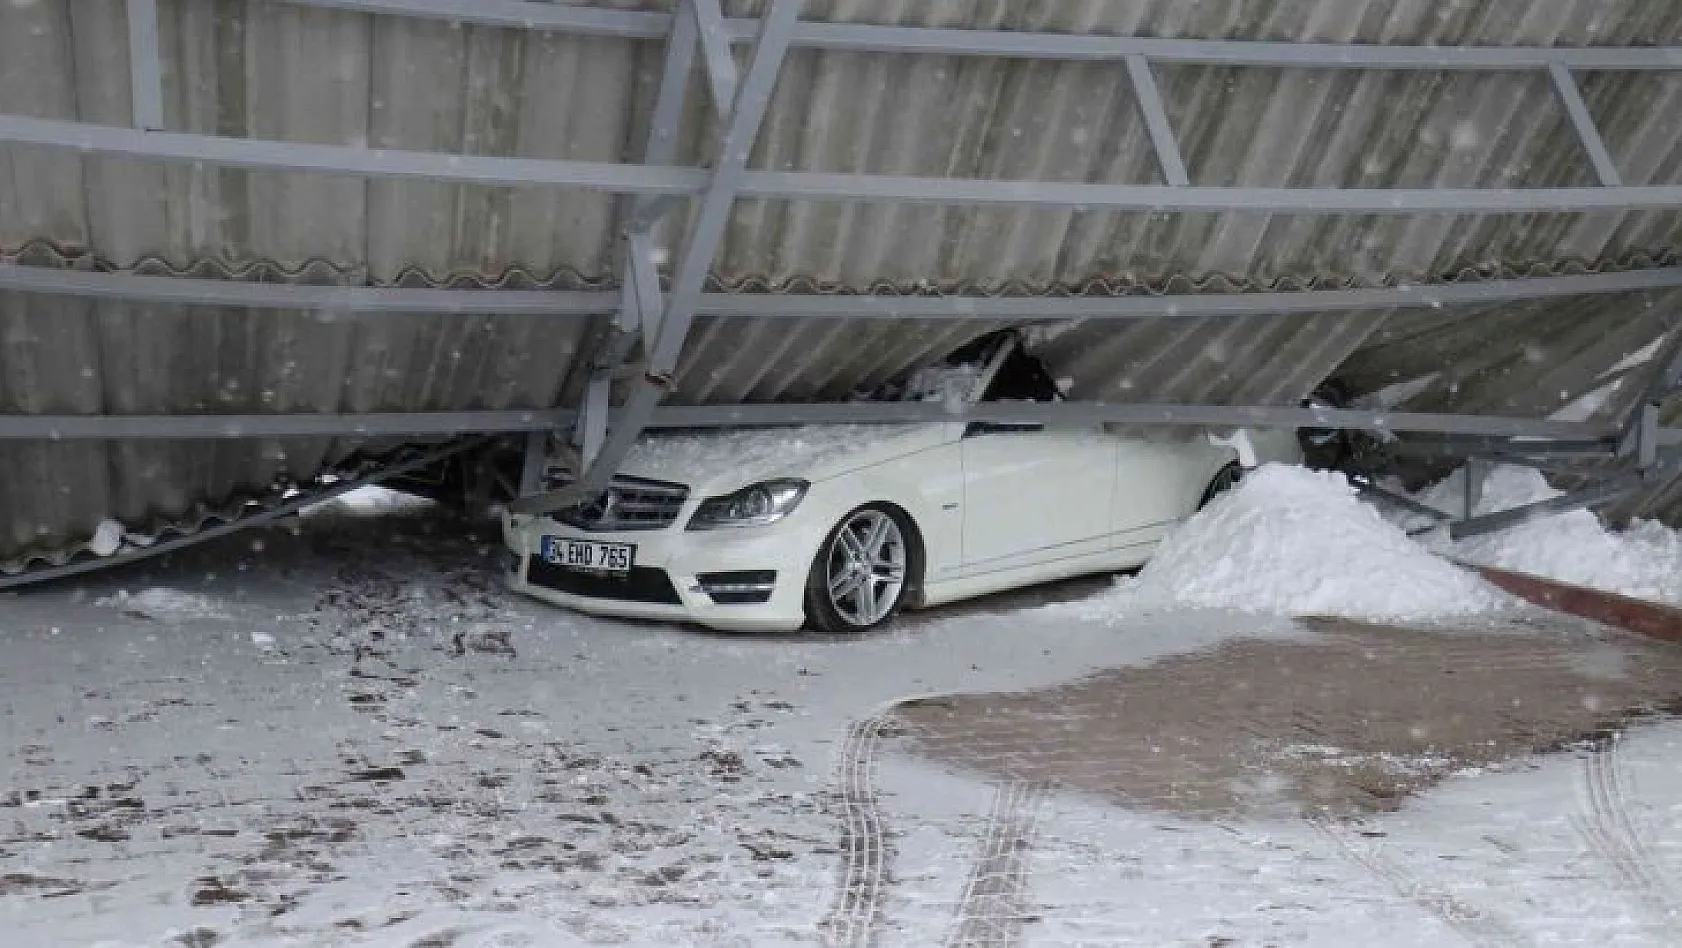 Malatya'da çatı kardan çöktü